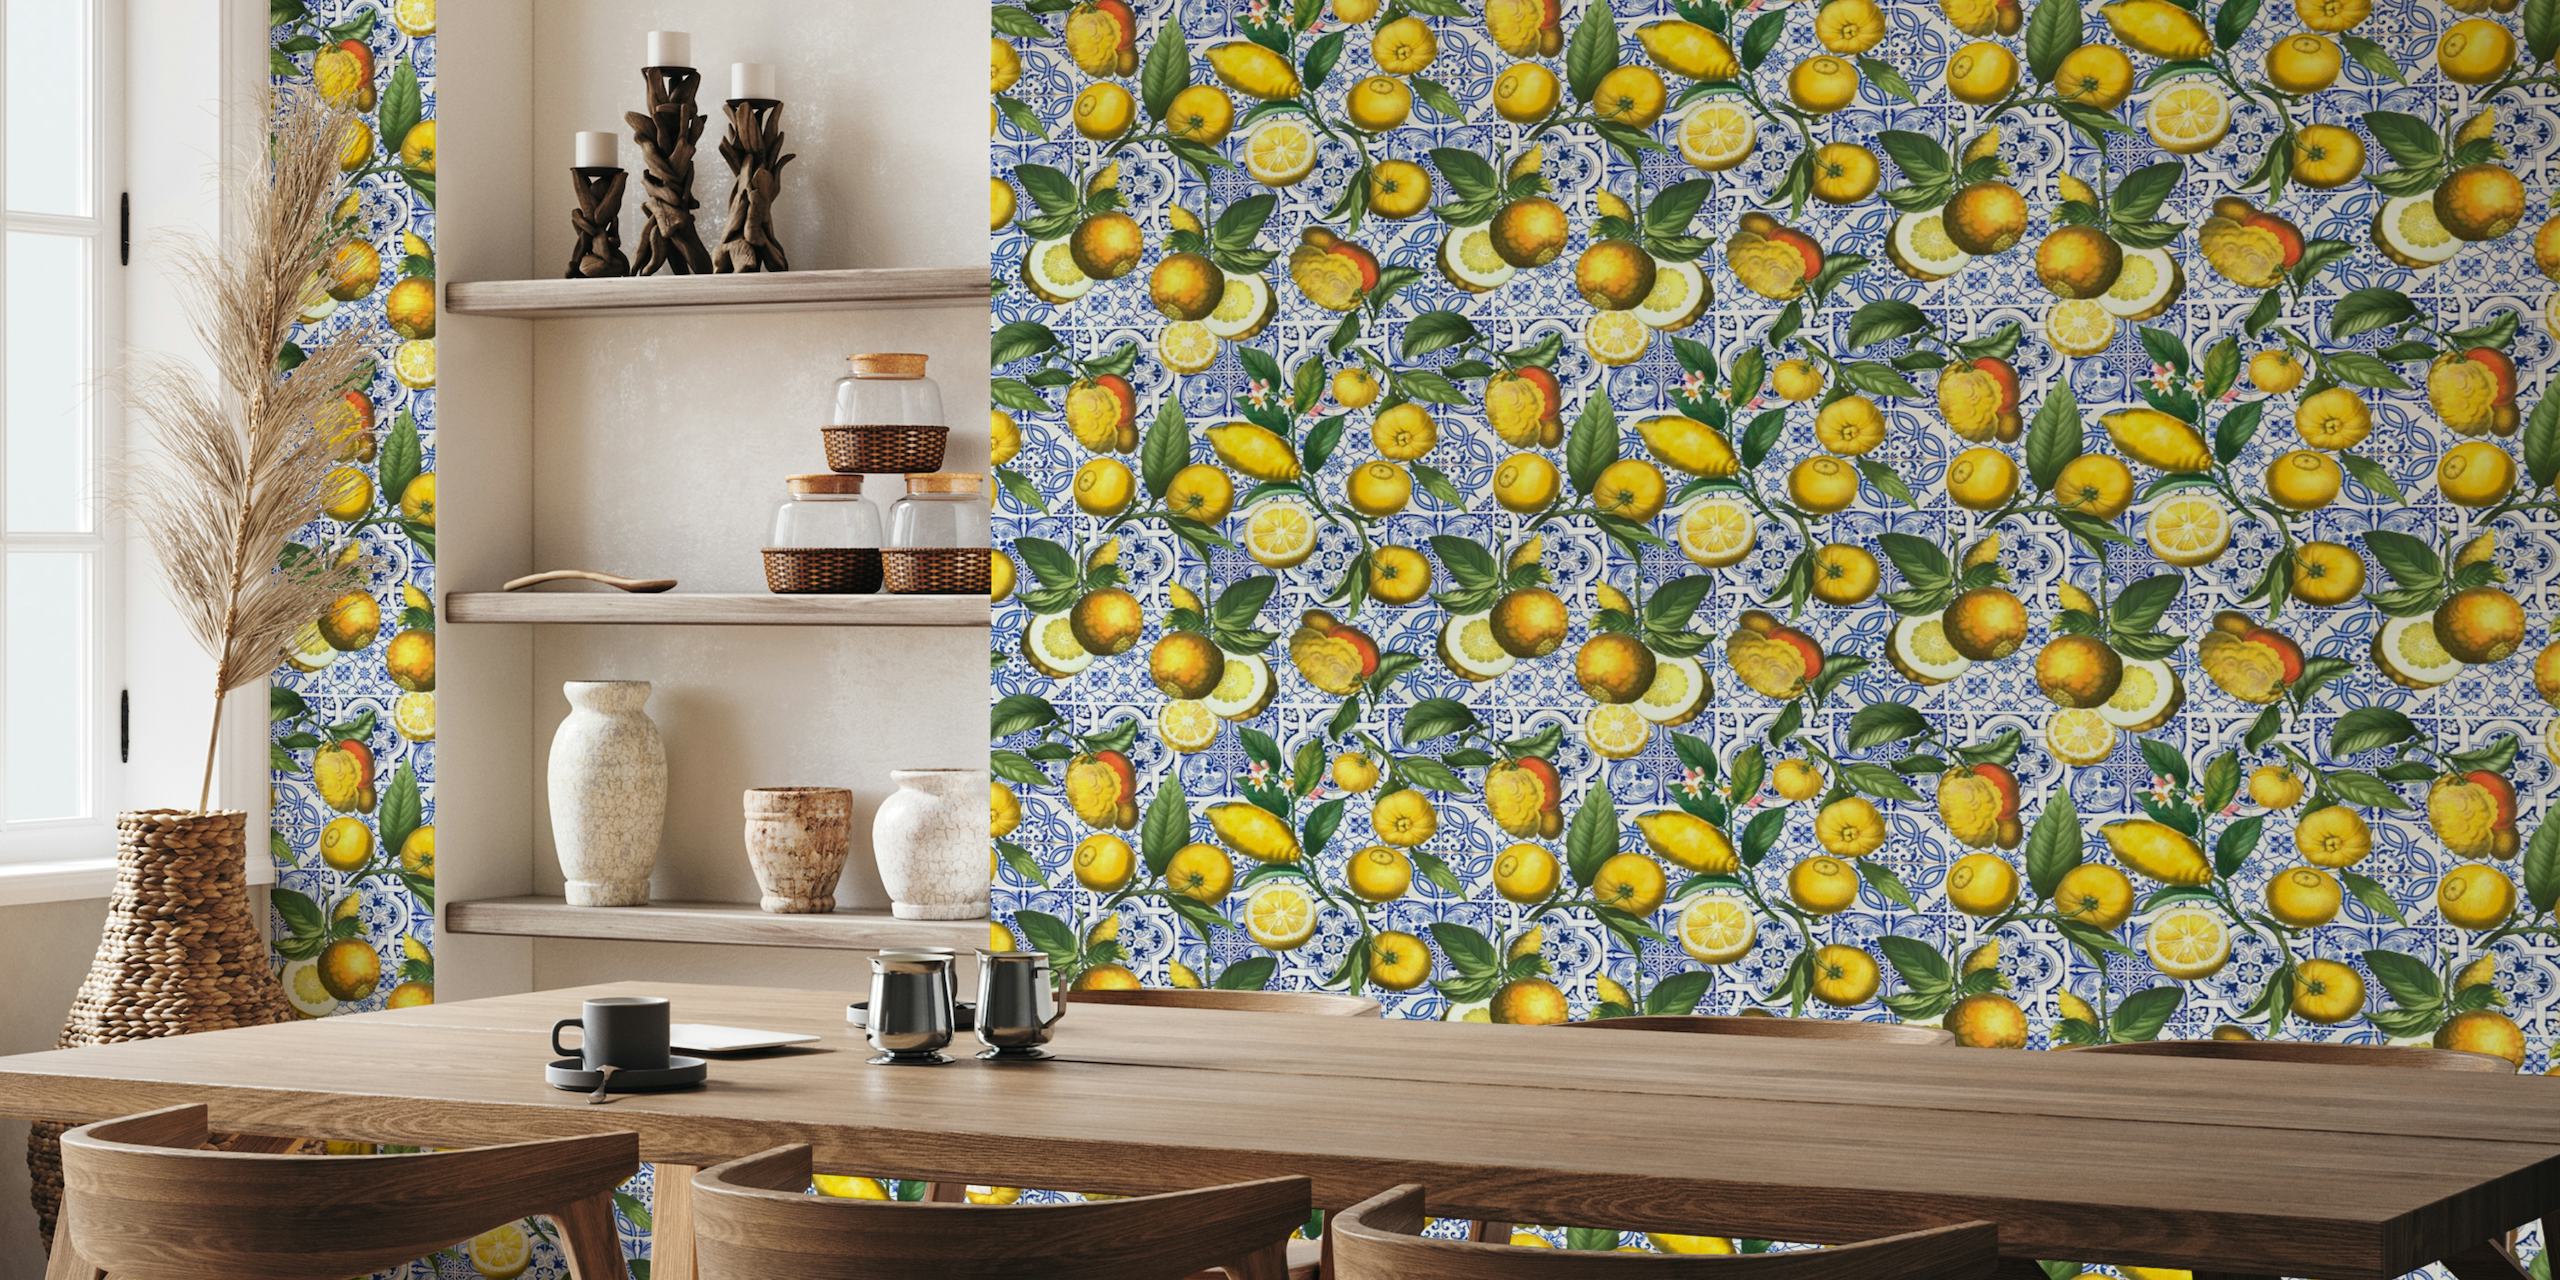 Lemon Fruits And Tiles ταπετσαρία